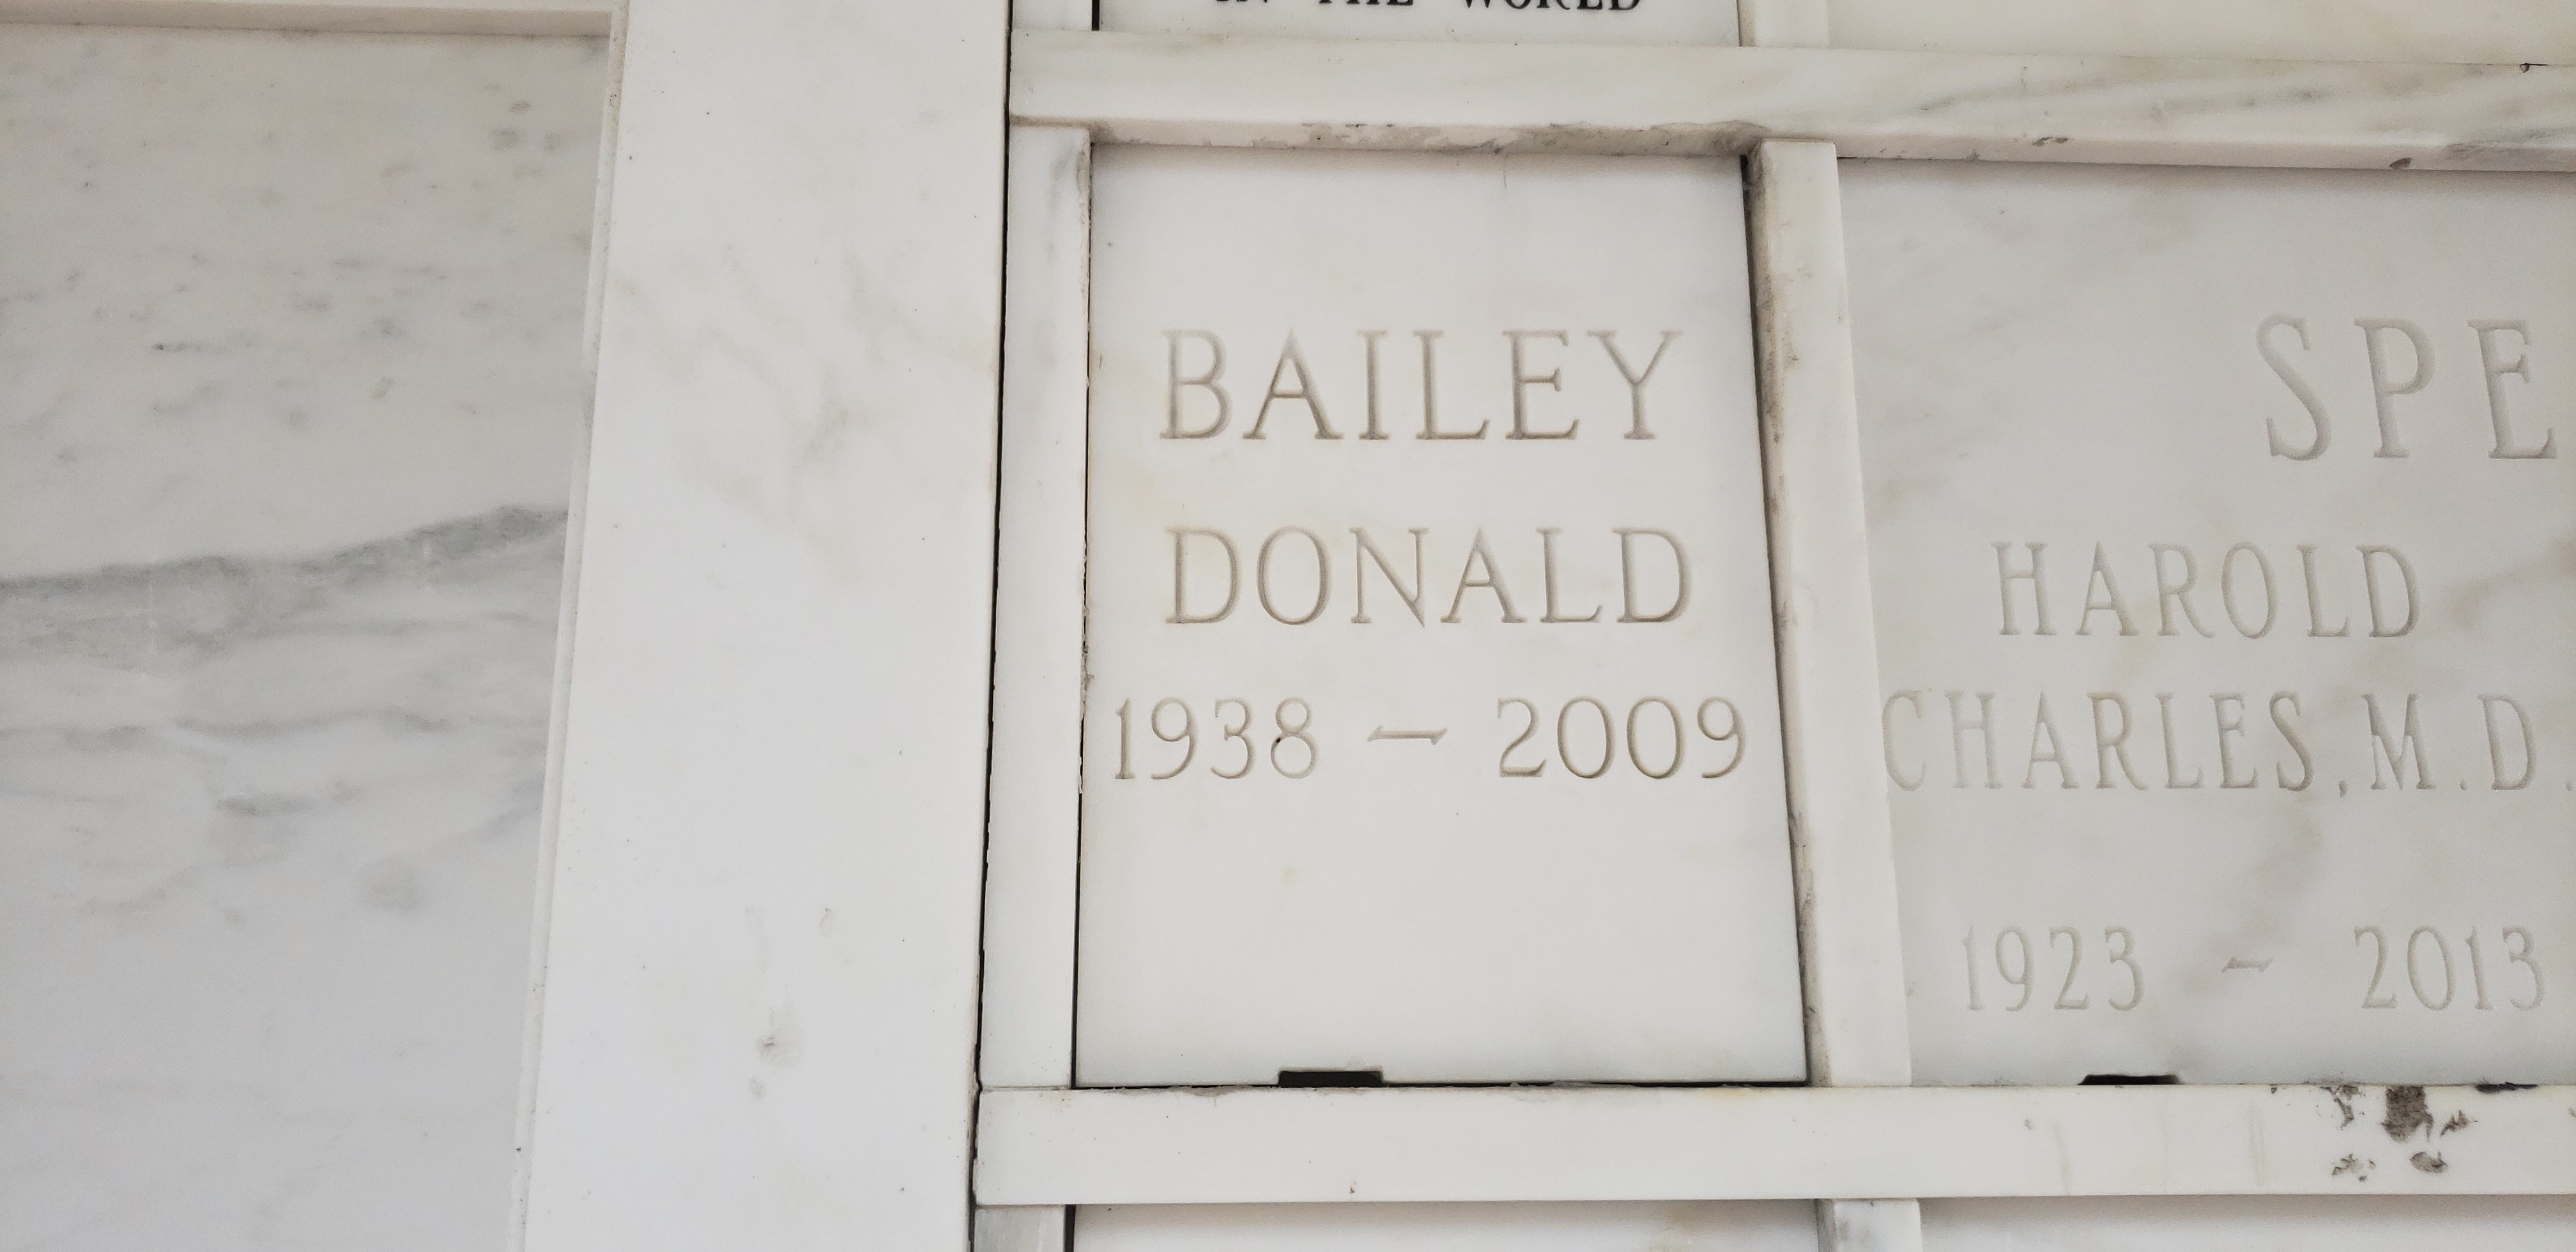 Donald Bailey